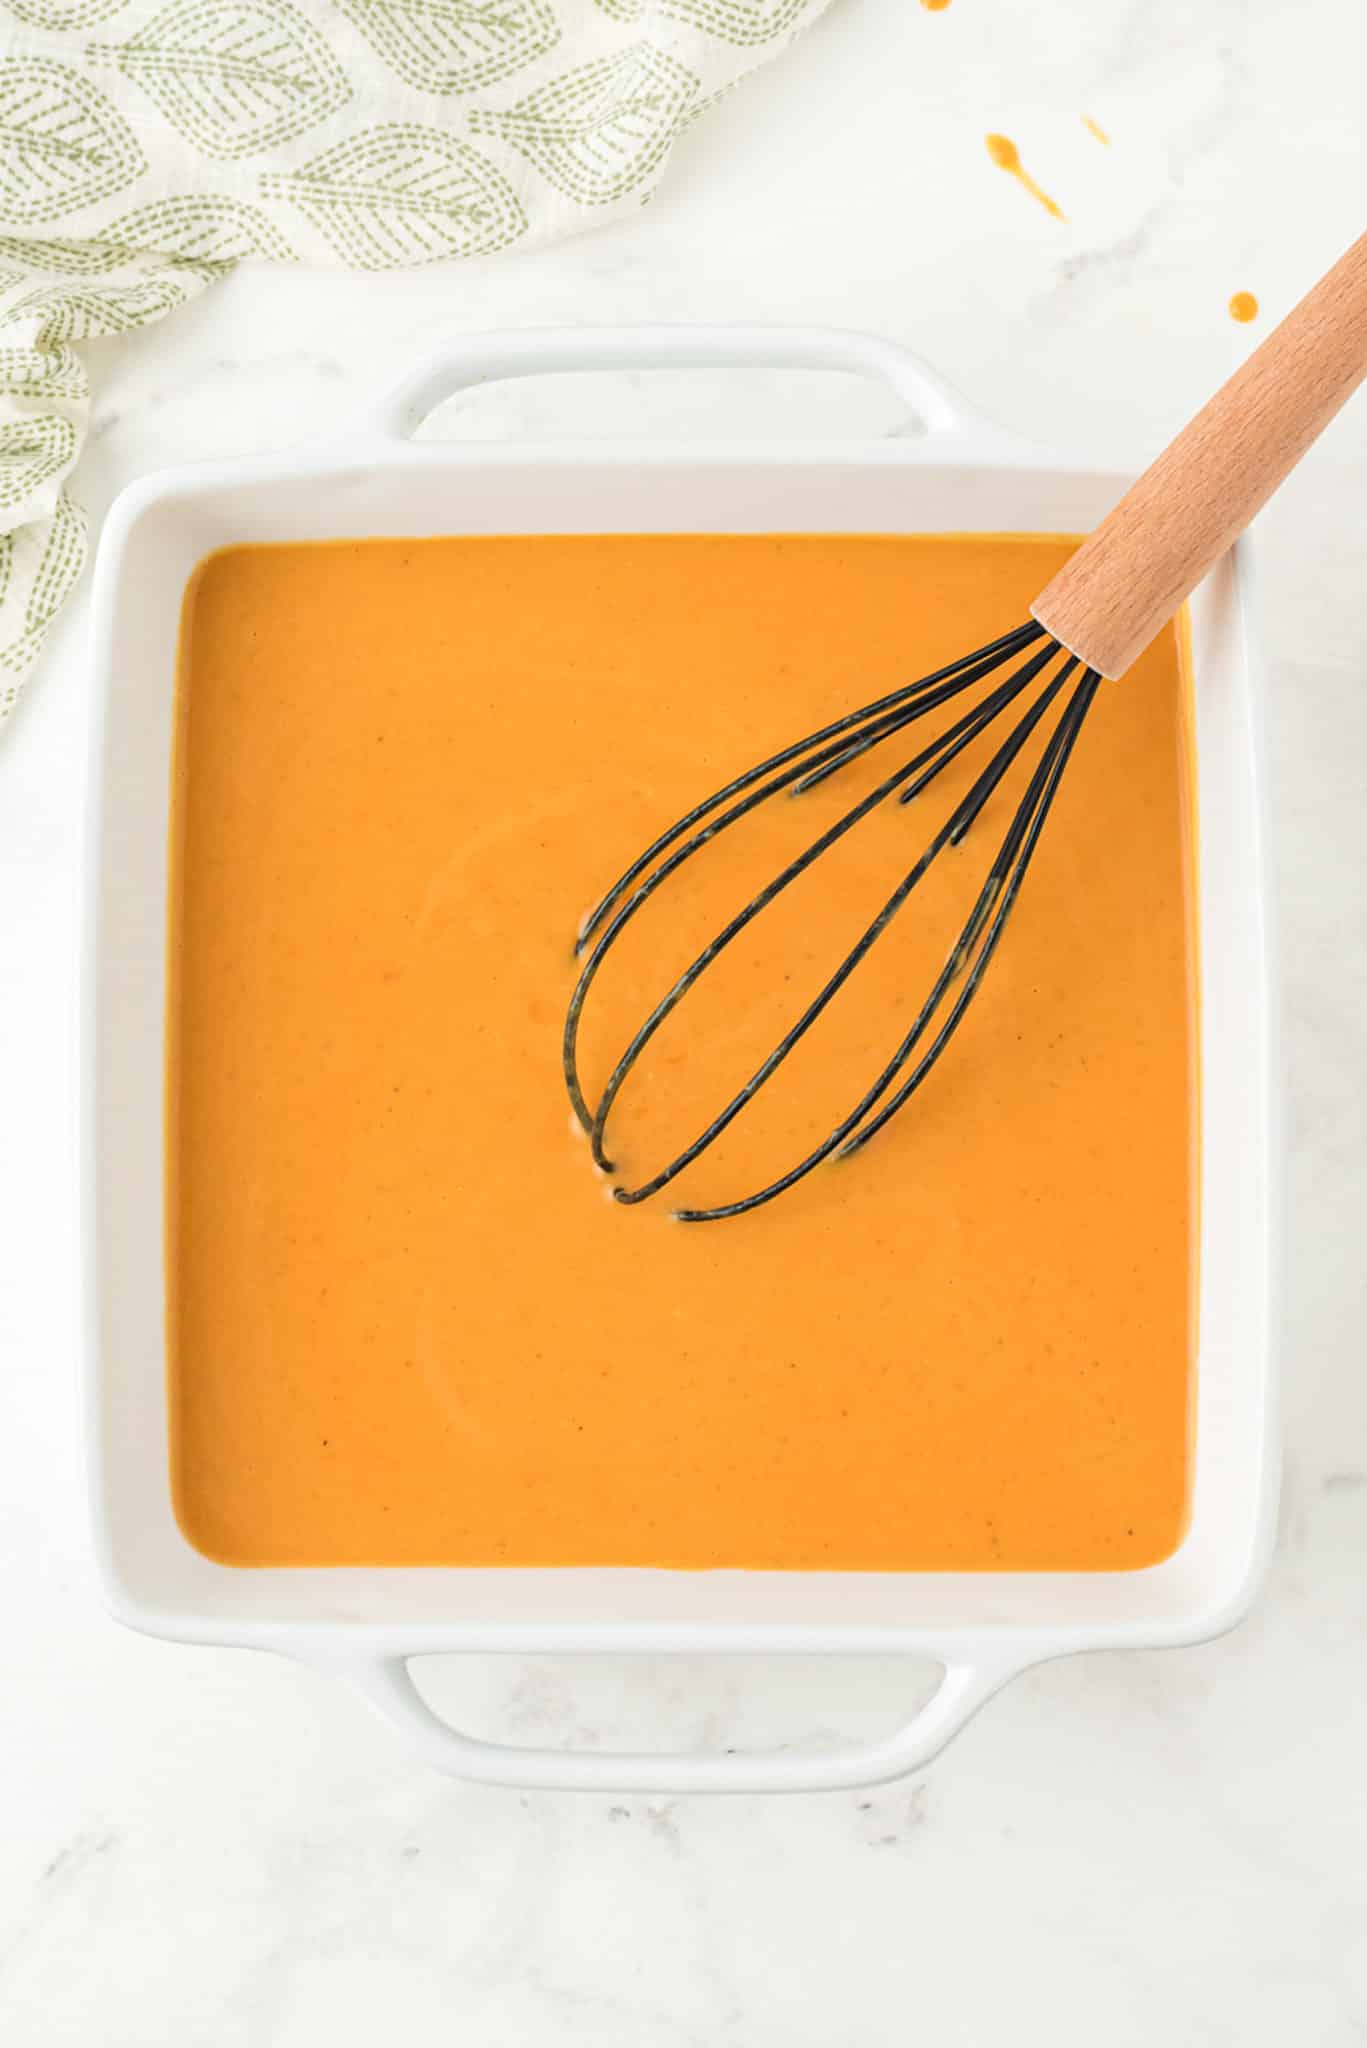 pumpkin pudding in a bowl